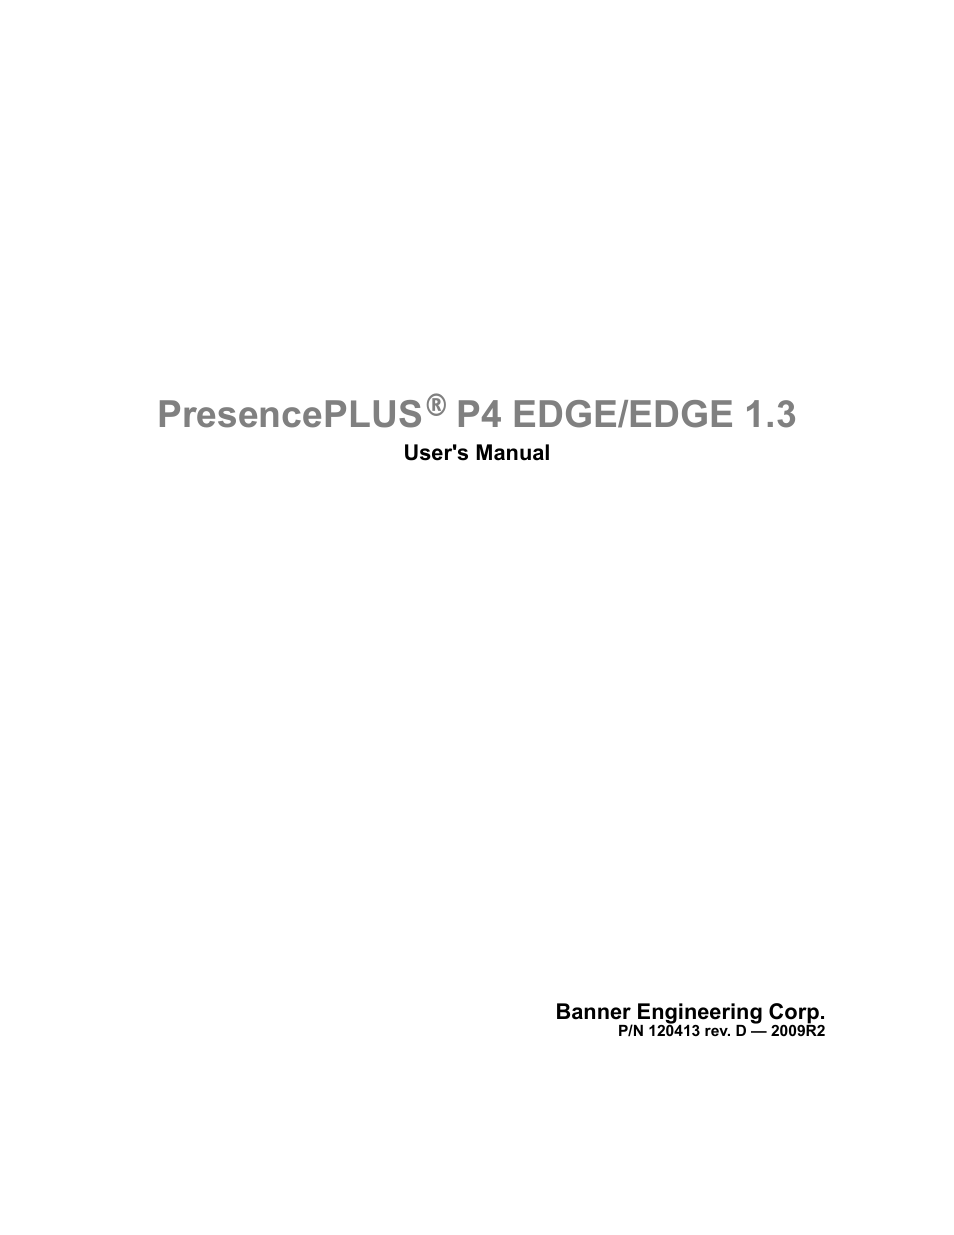 PresencePLUS P4 EDGE Series